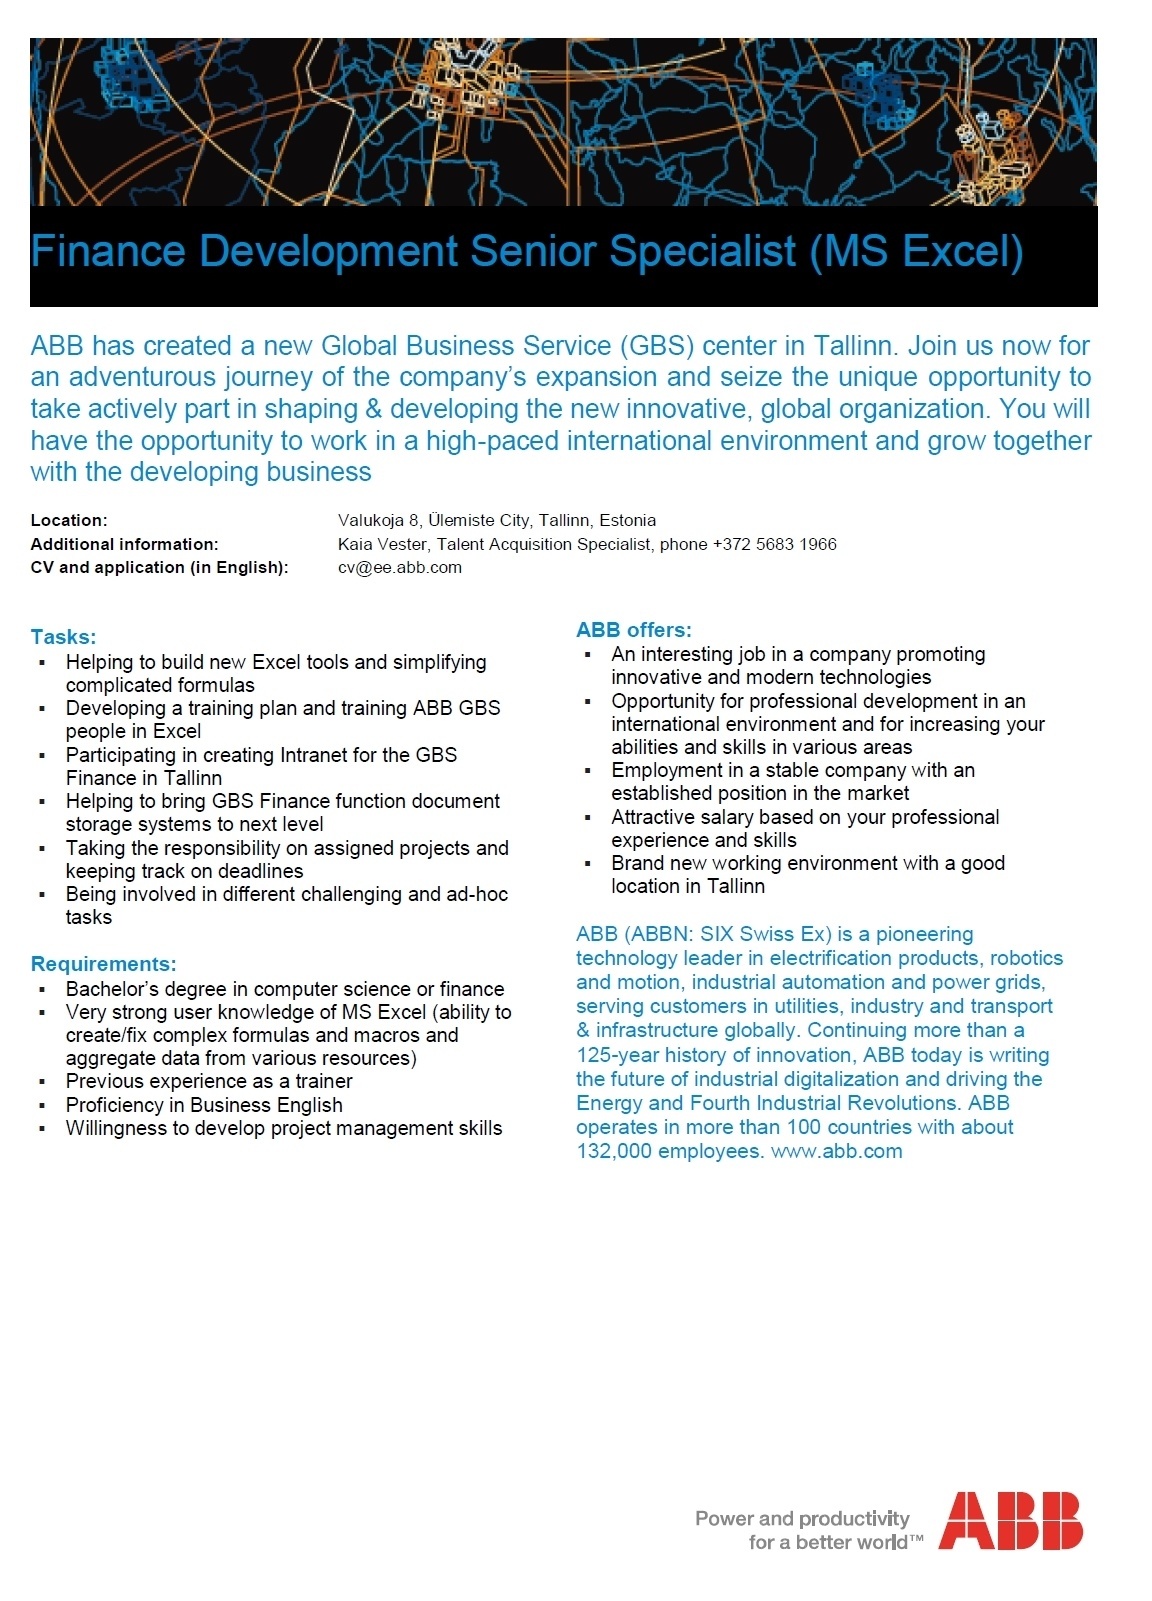 ABB AS Finance Development Senior Specialist (MS Excel) 